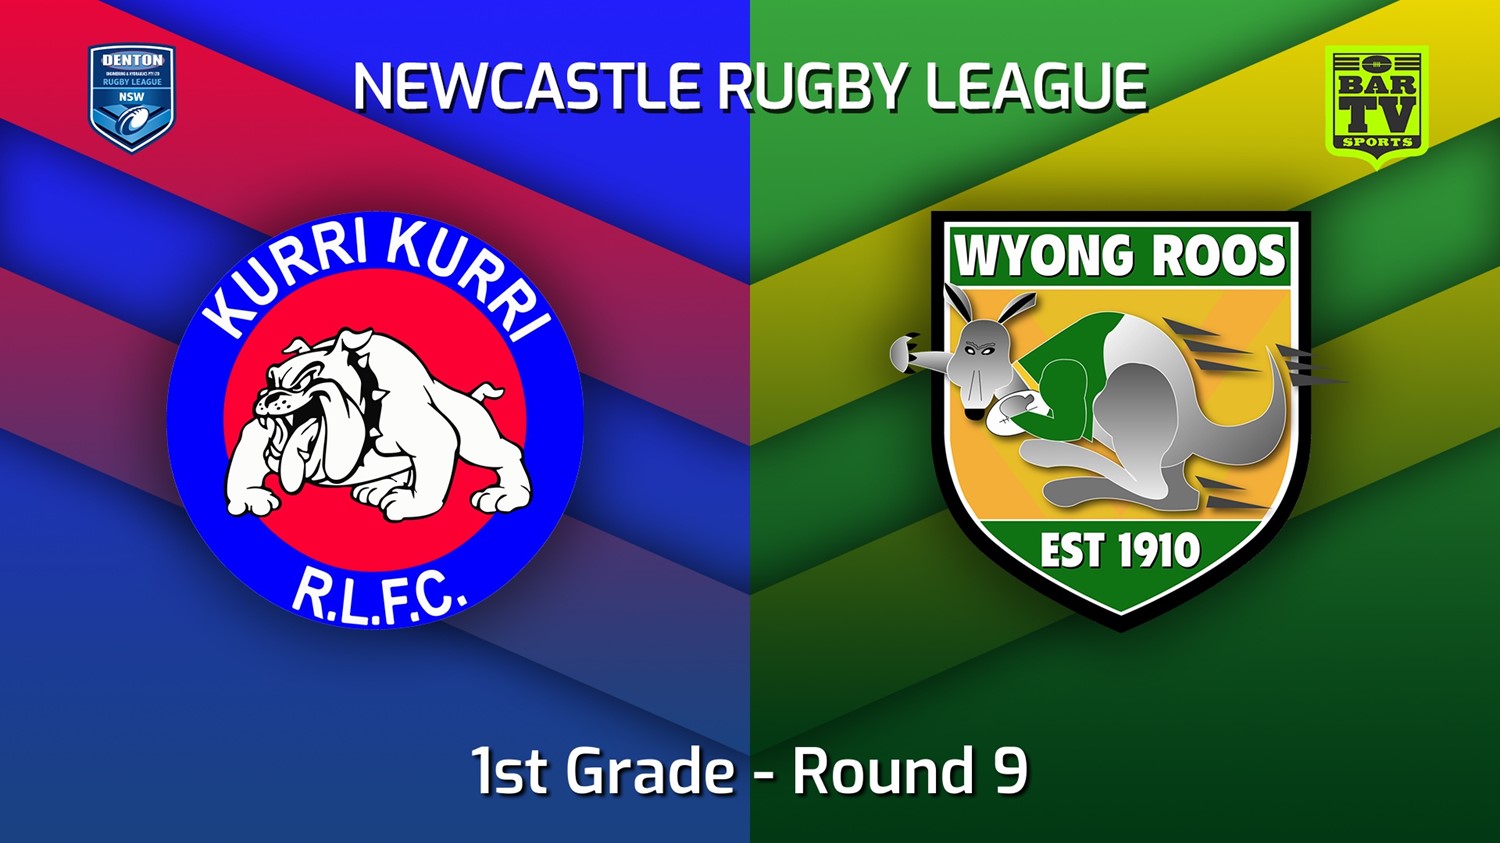 220528-Newcastle Round 9 - 1st Grade - Kurri Kurri Bulldogs v Wyong Roos Minigame Slate Image